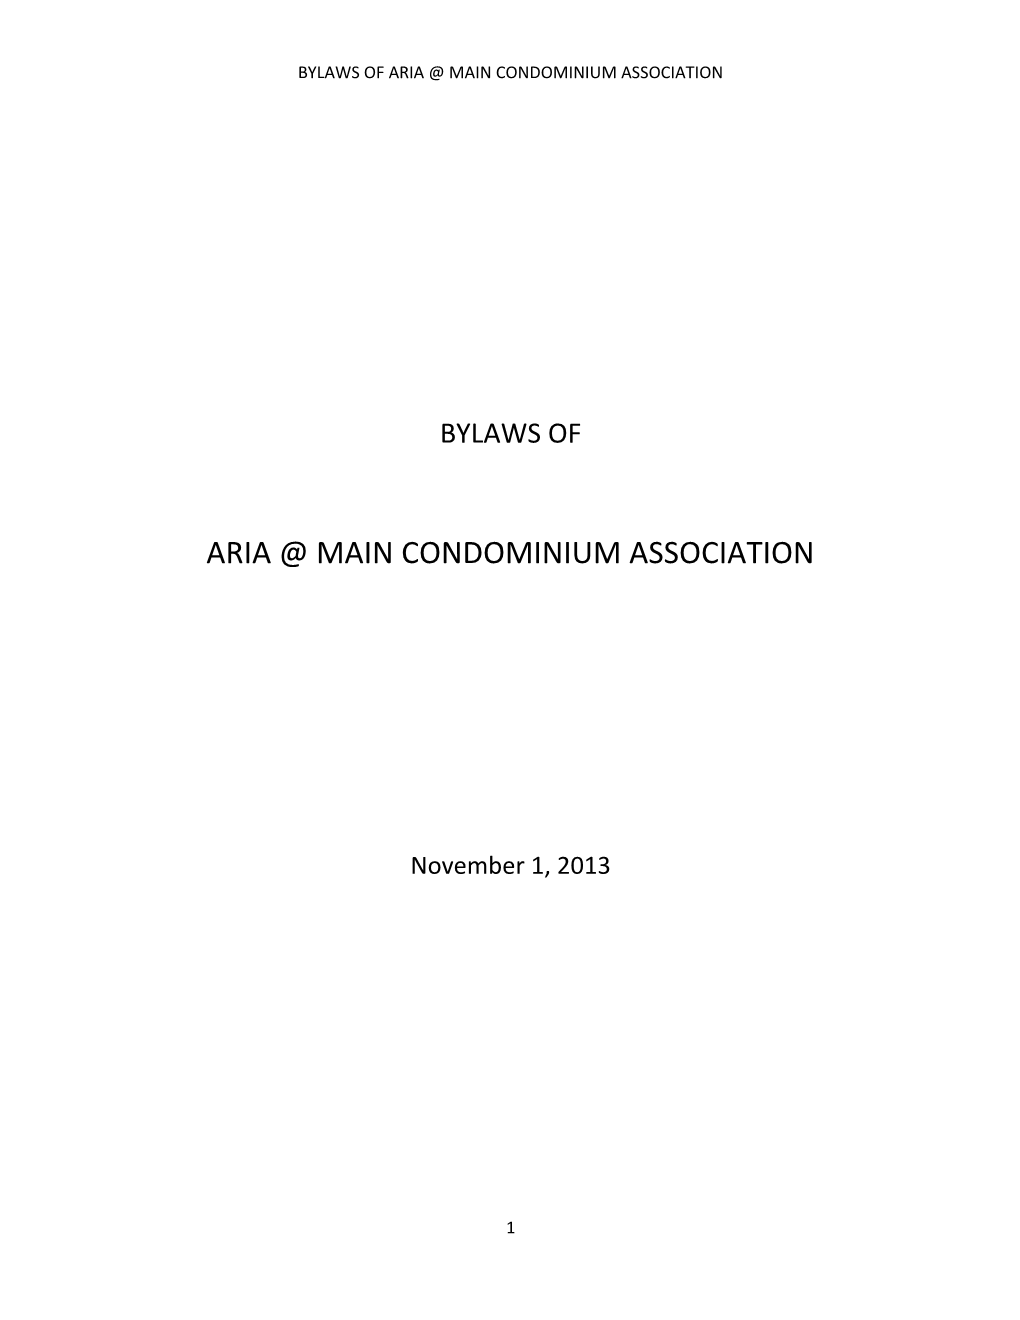 Bylaws of Aria Main Condominium Association